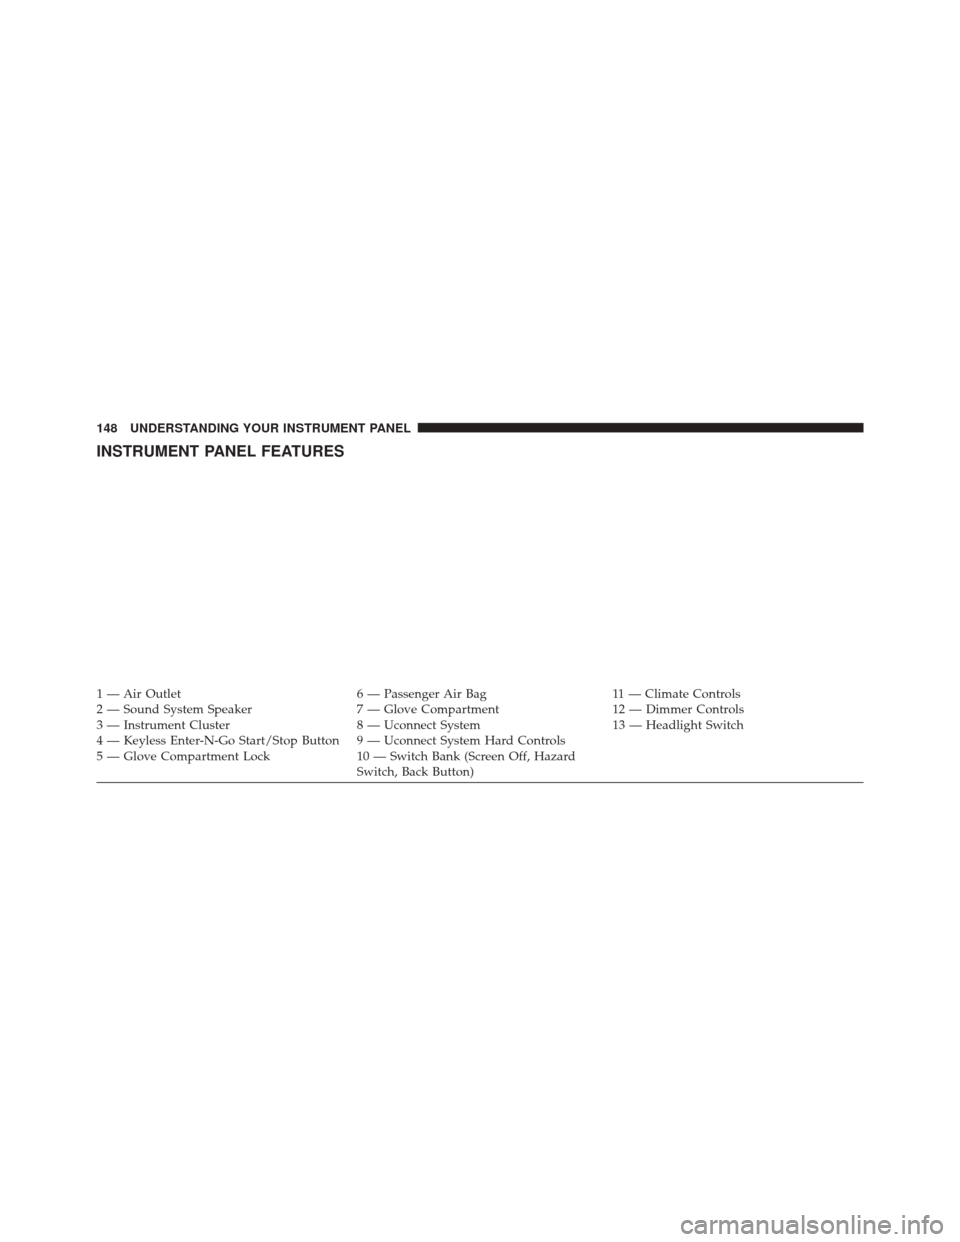 DODGE VIPER SRT 2016 VX / 3.G Owners Manual INSTRUMENT PANEL FEATURES
1 — Air Outlet6 — Passenger Air Bag11 — Climate Controls
2 — Sound System Speaker 7 — Glove Compartment12 — Dimmer Controls
3 — Instrument Cluster 8 — Uconnec